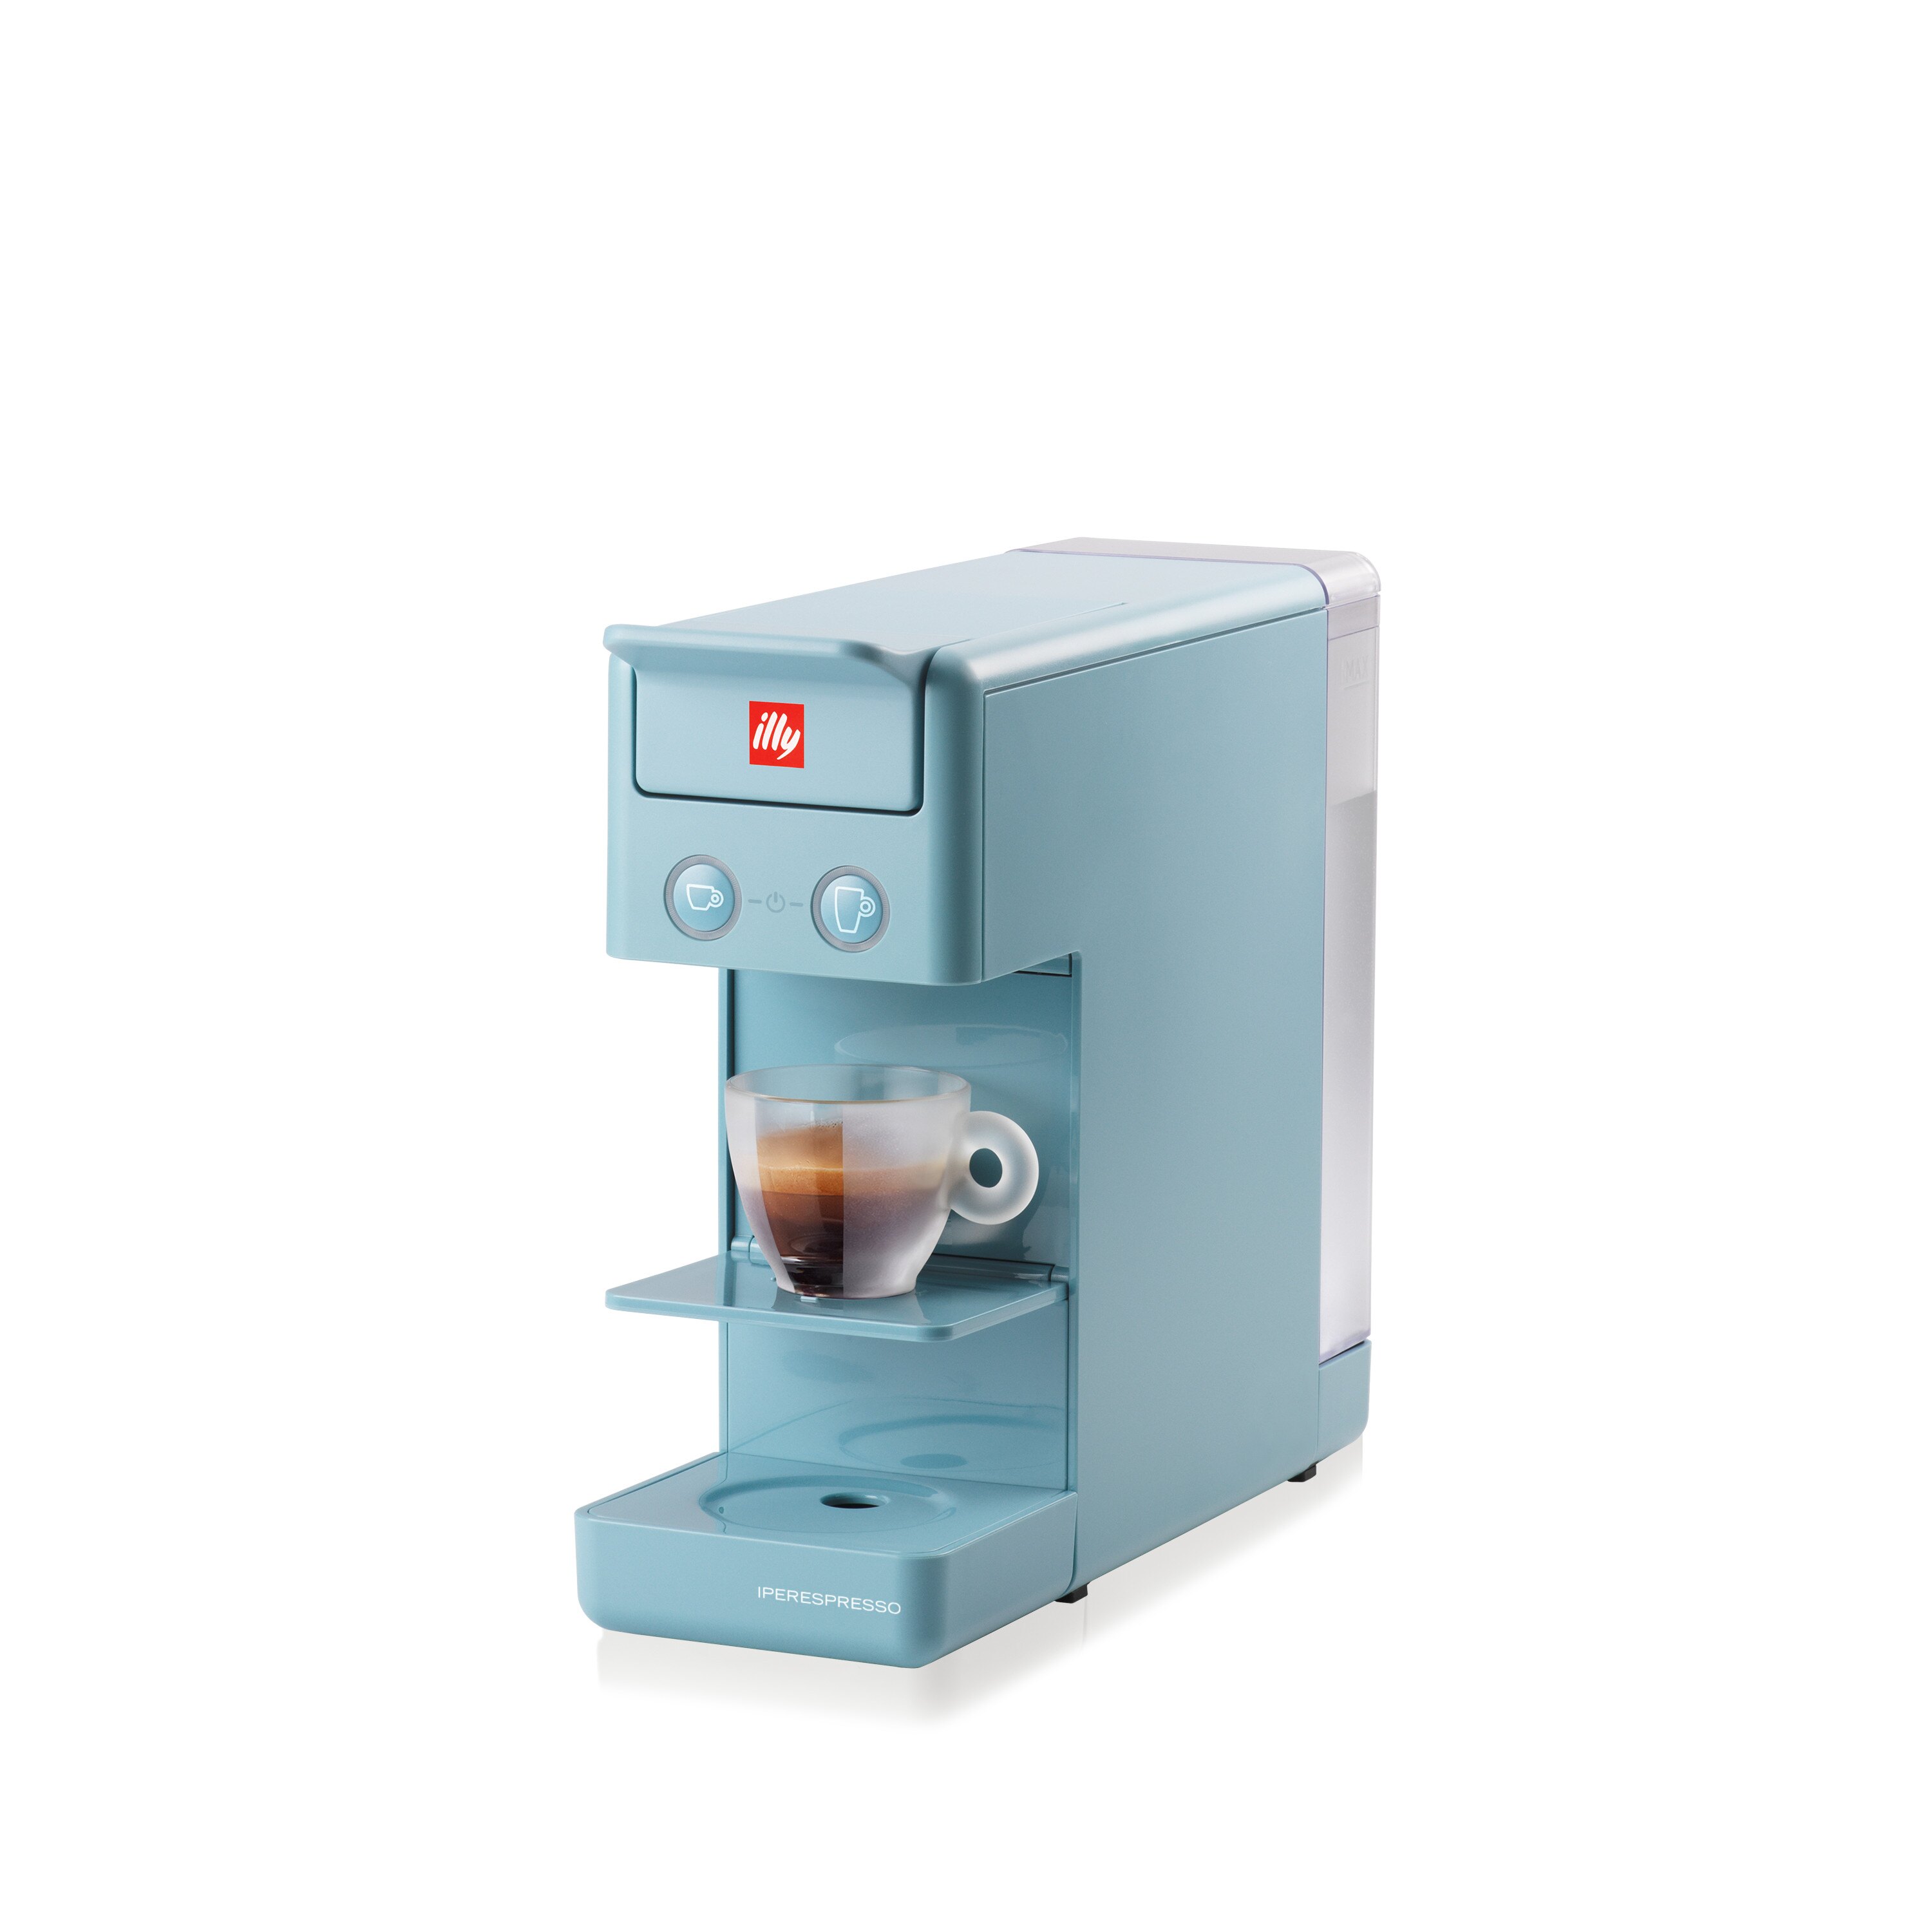 illy Y3.3 iperEspresso Espresso & Coffee Machine - Cape Town Blue #60384